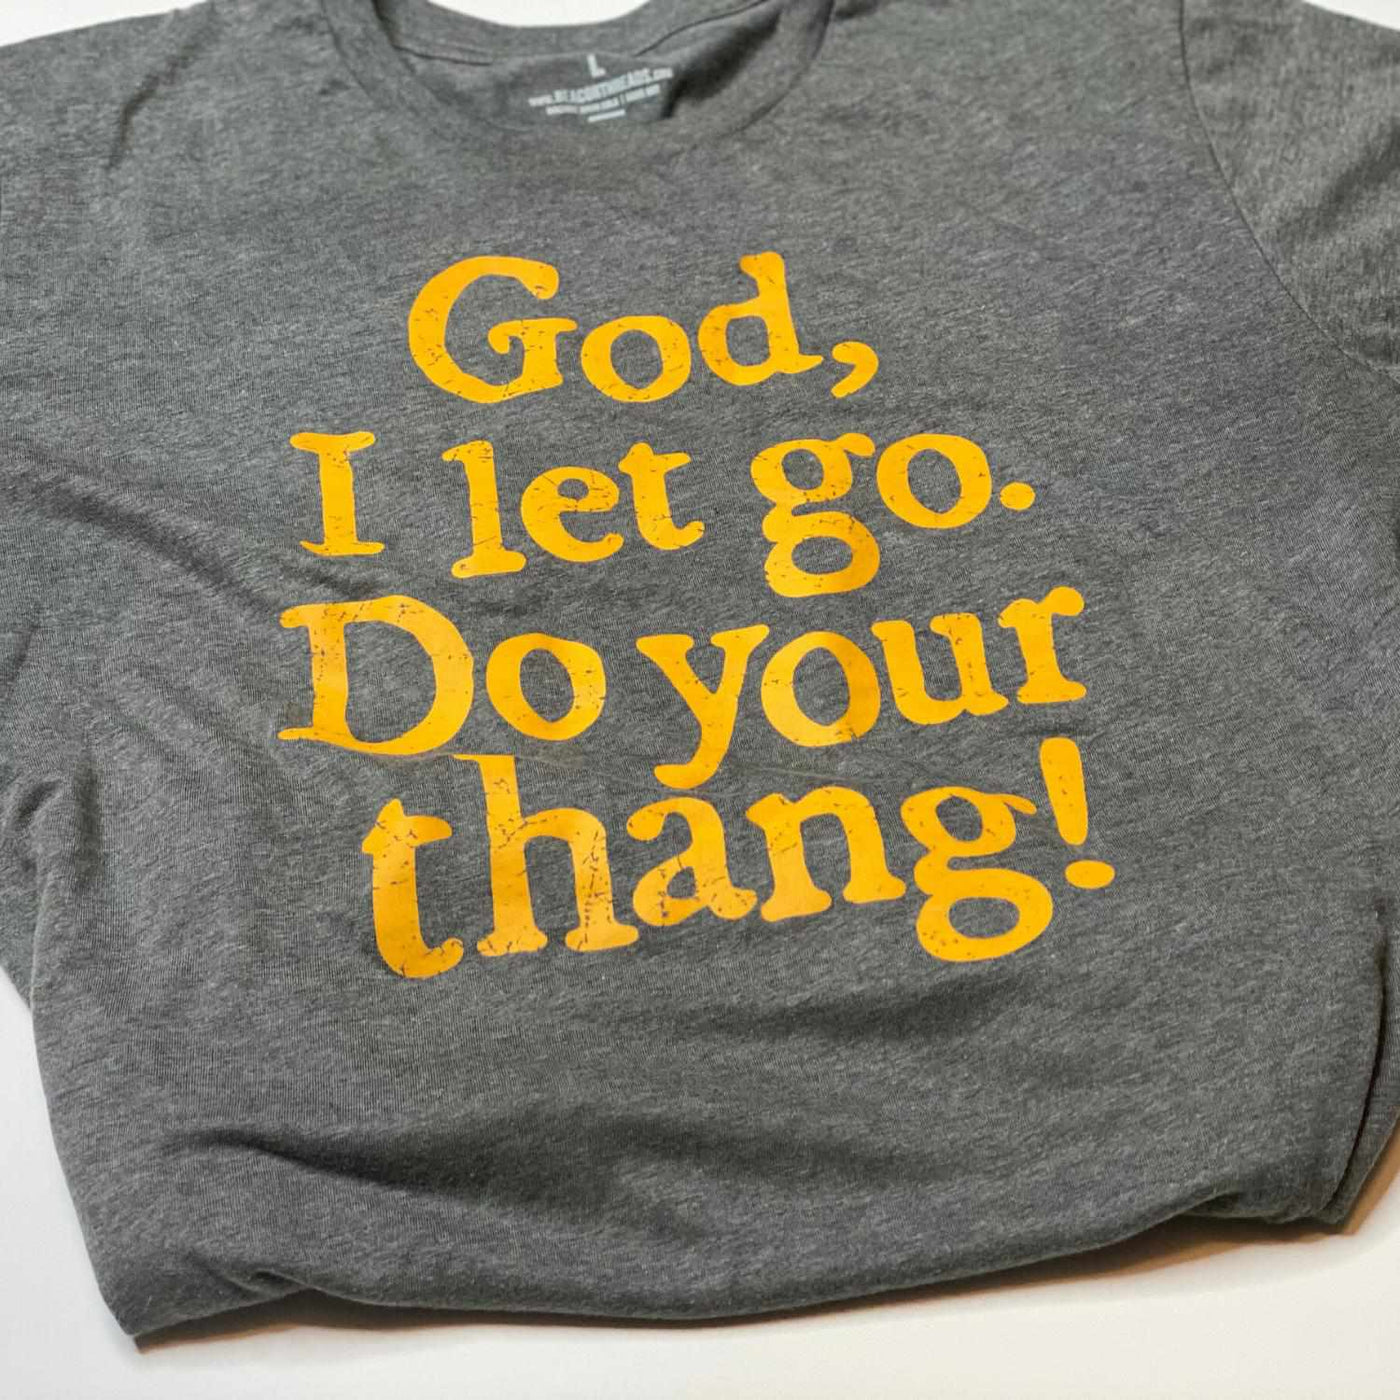  T-Shirt Godgirl Gifts